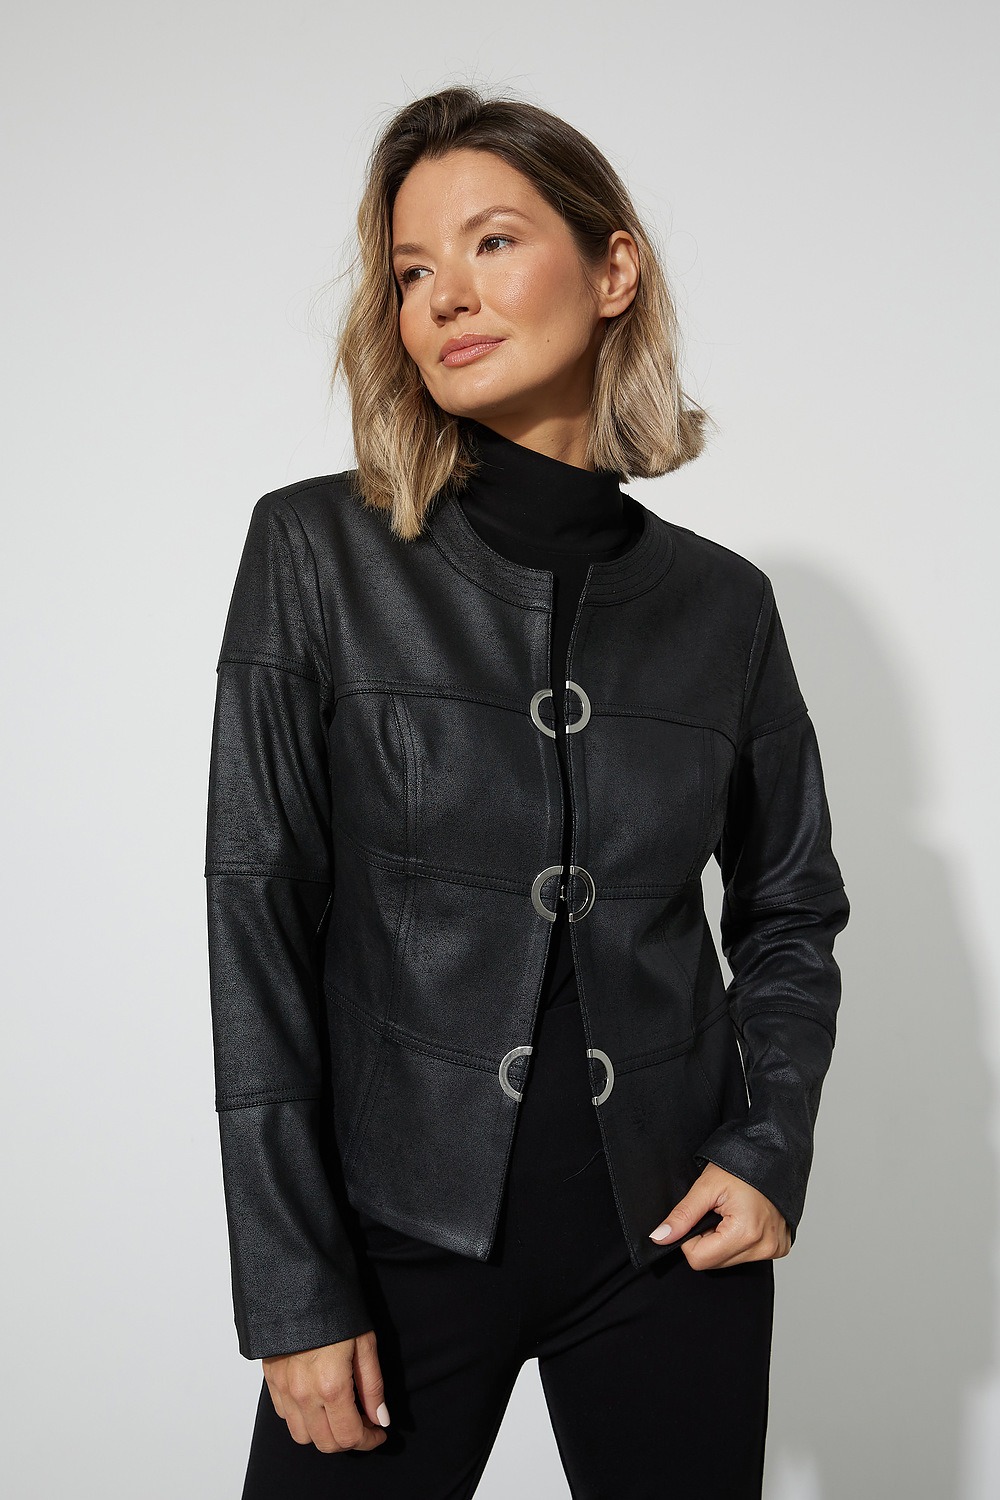 Joseph Ribkoff jackets & blazers style 222900. Noir